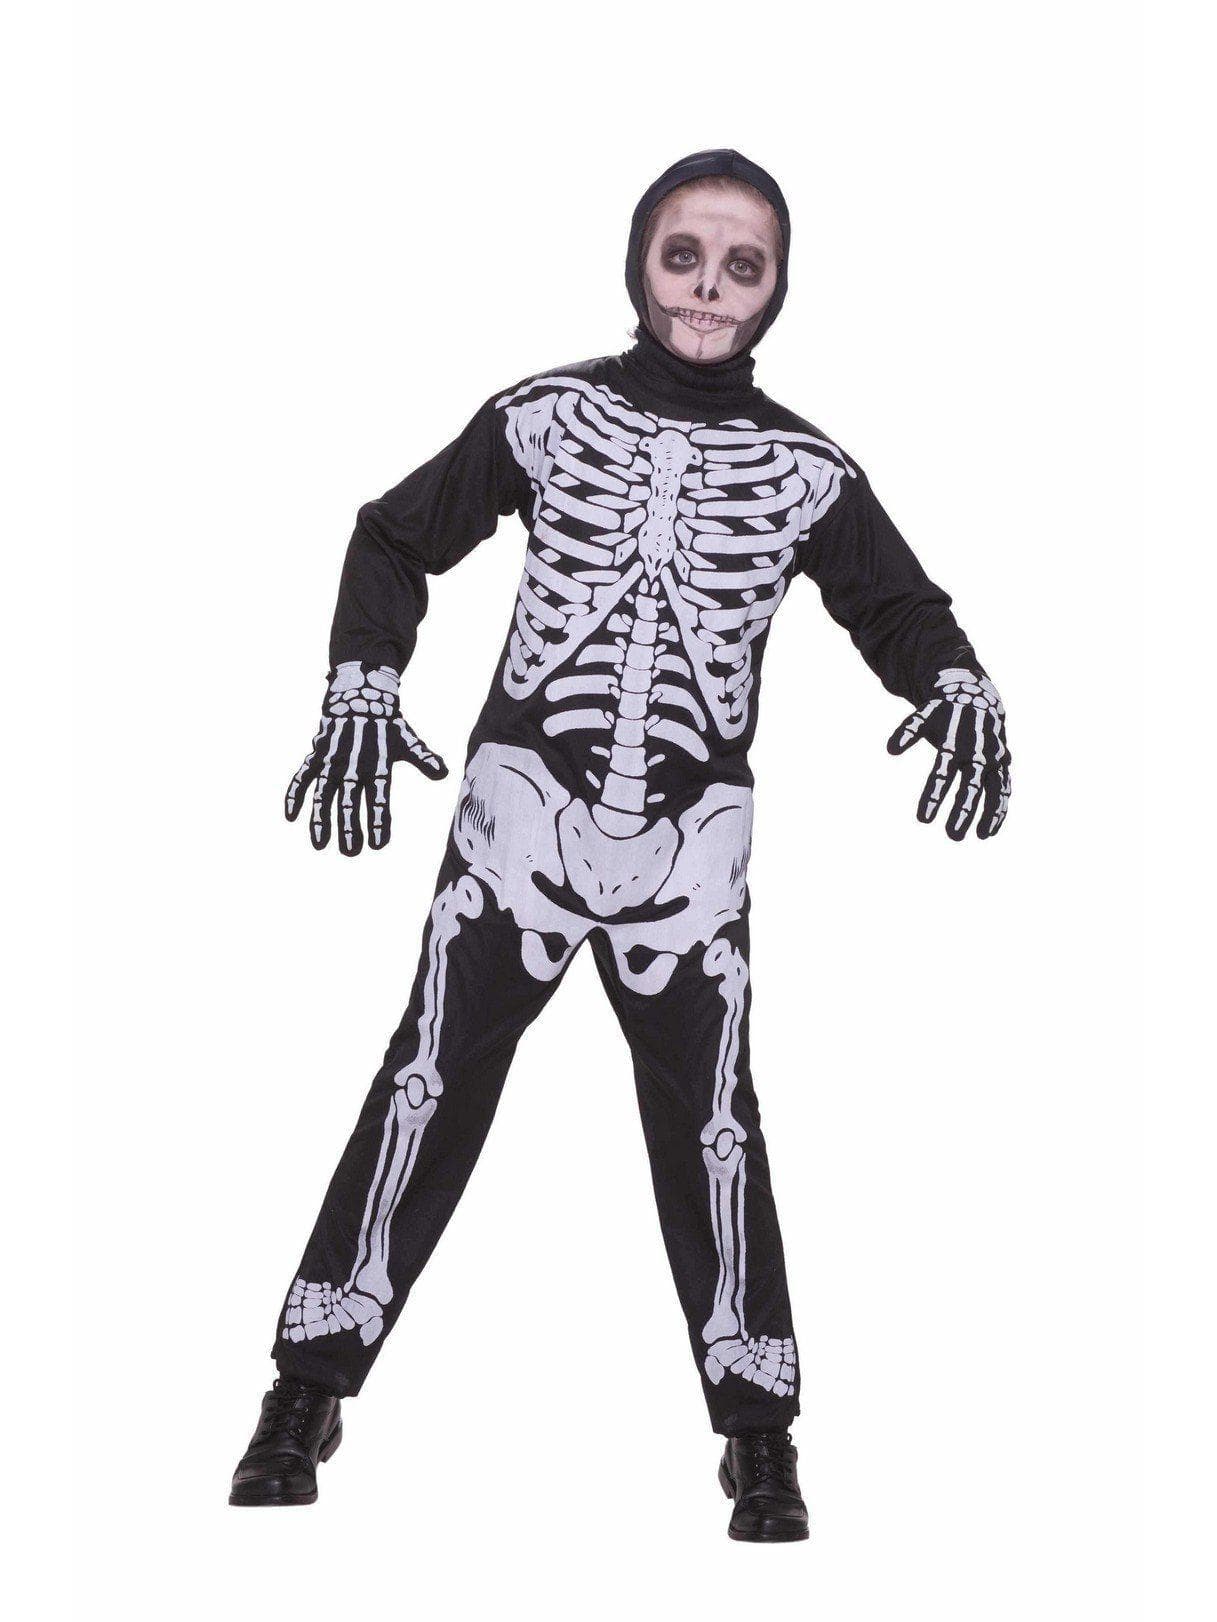 Kid's Skeleton Costume - costumes.com